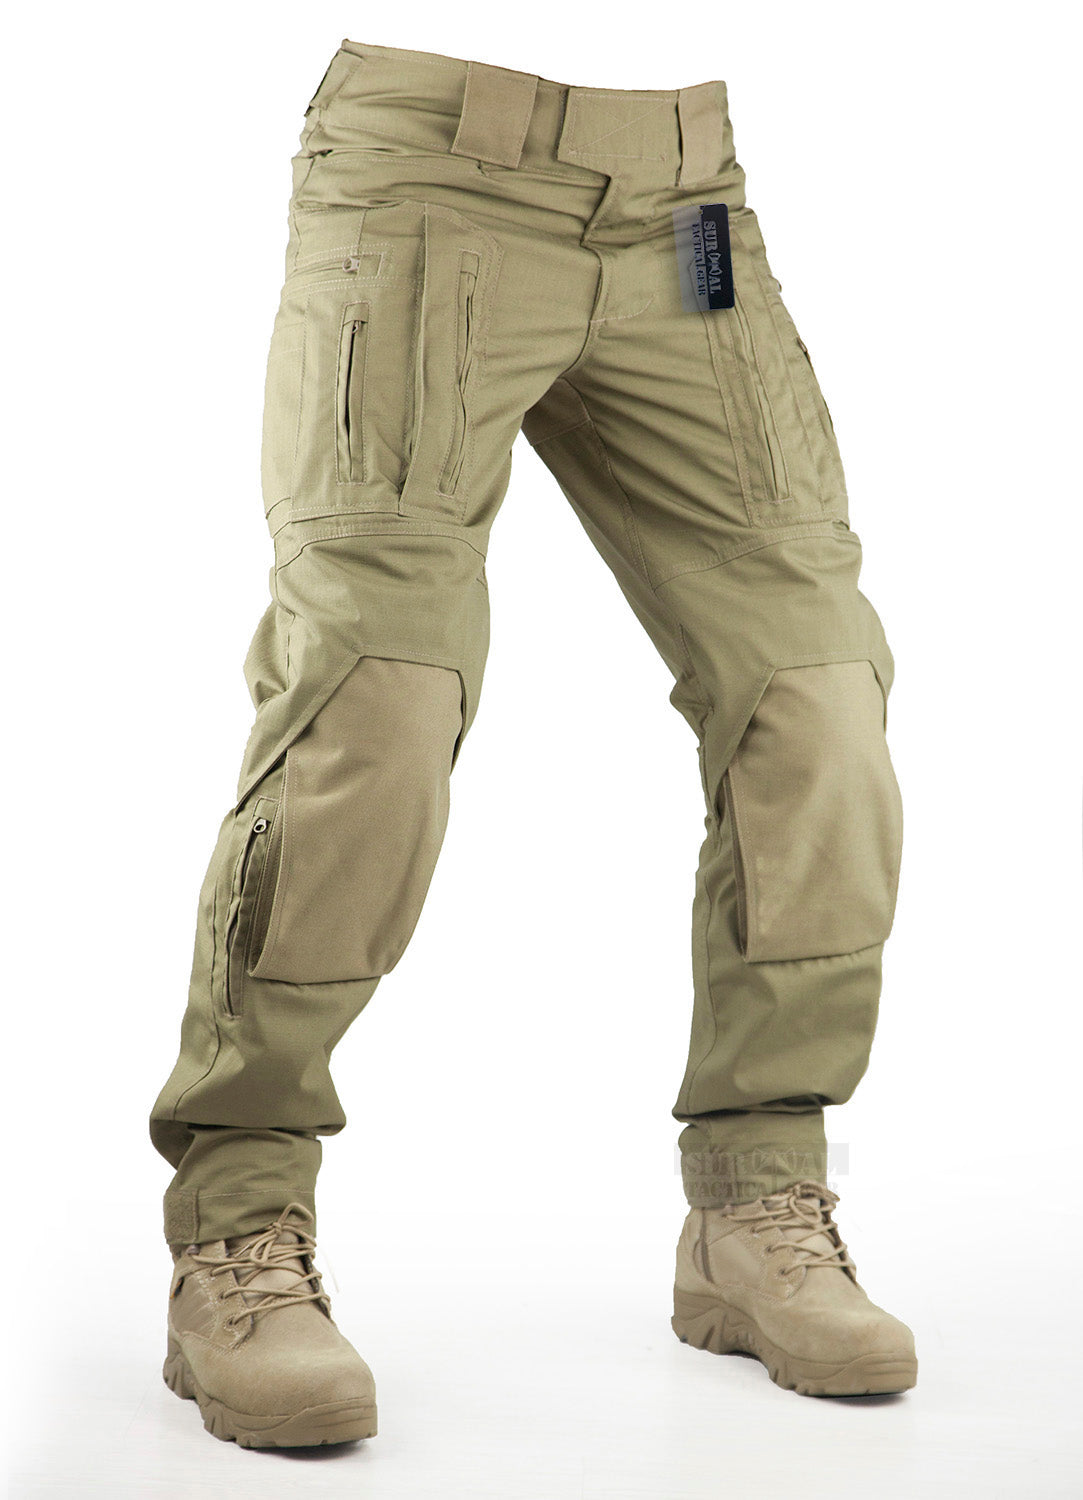 Tactical Combat Pants with knee pads Zewana X1 MaWka G2